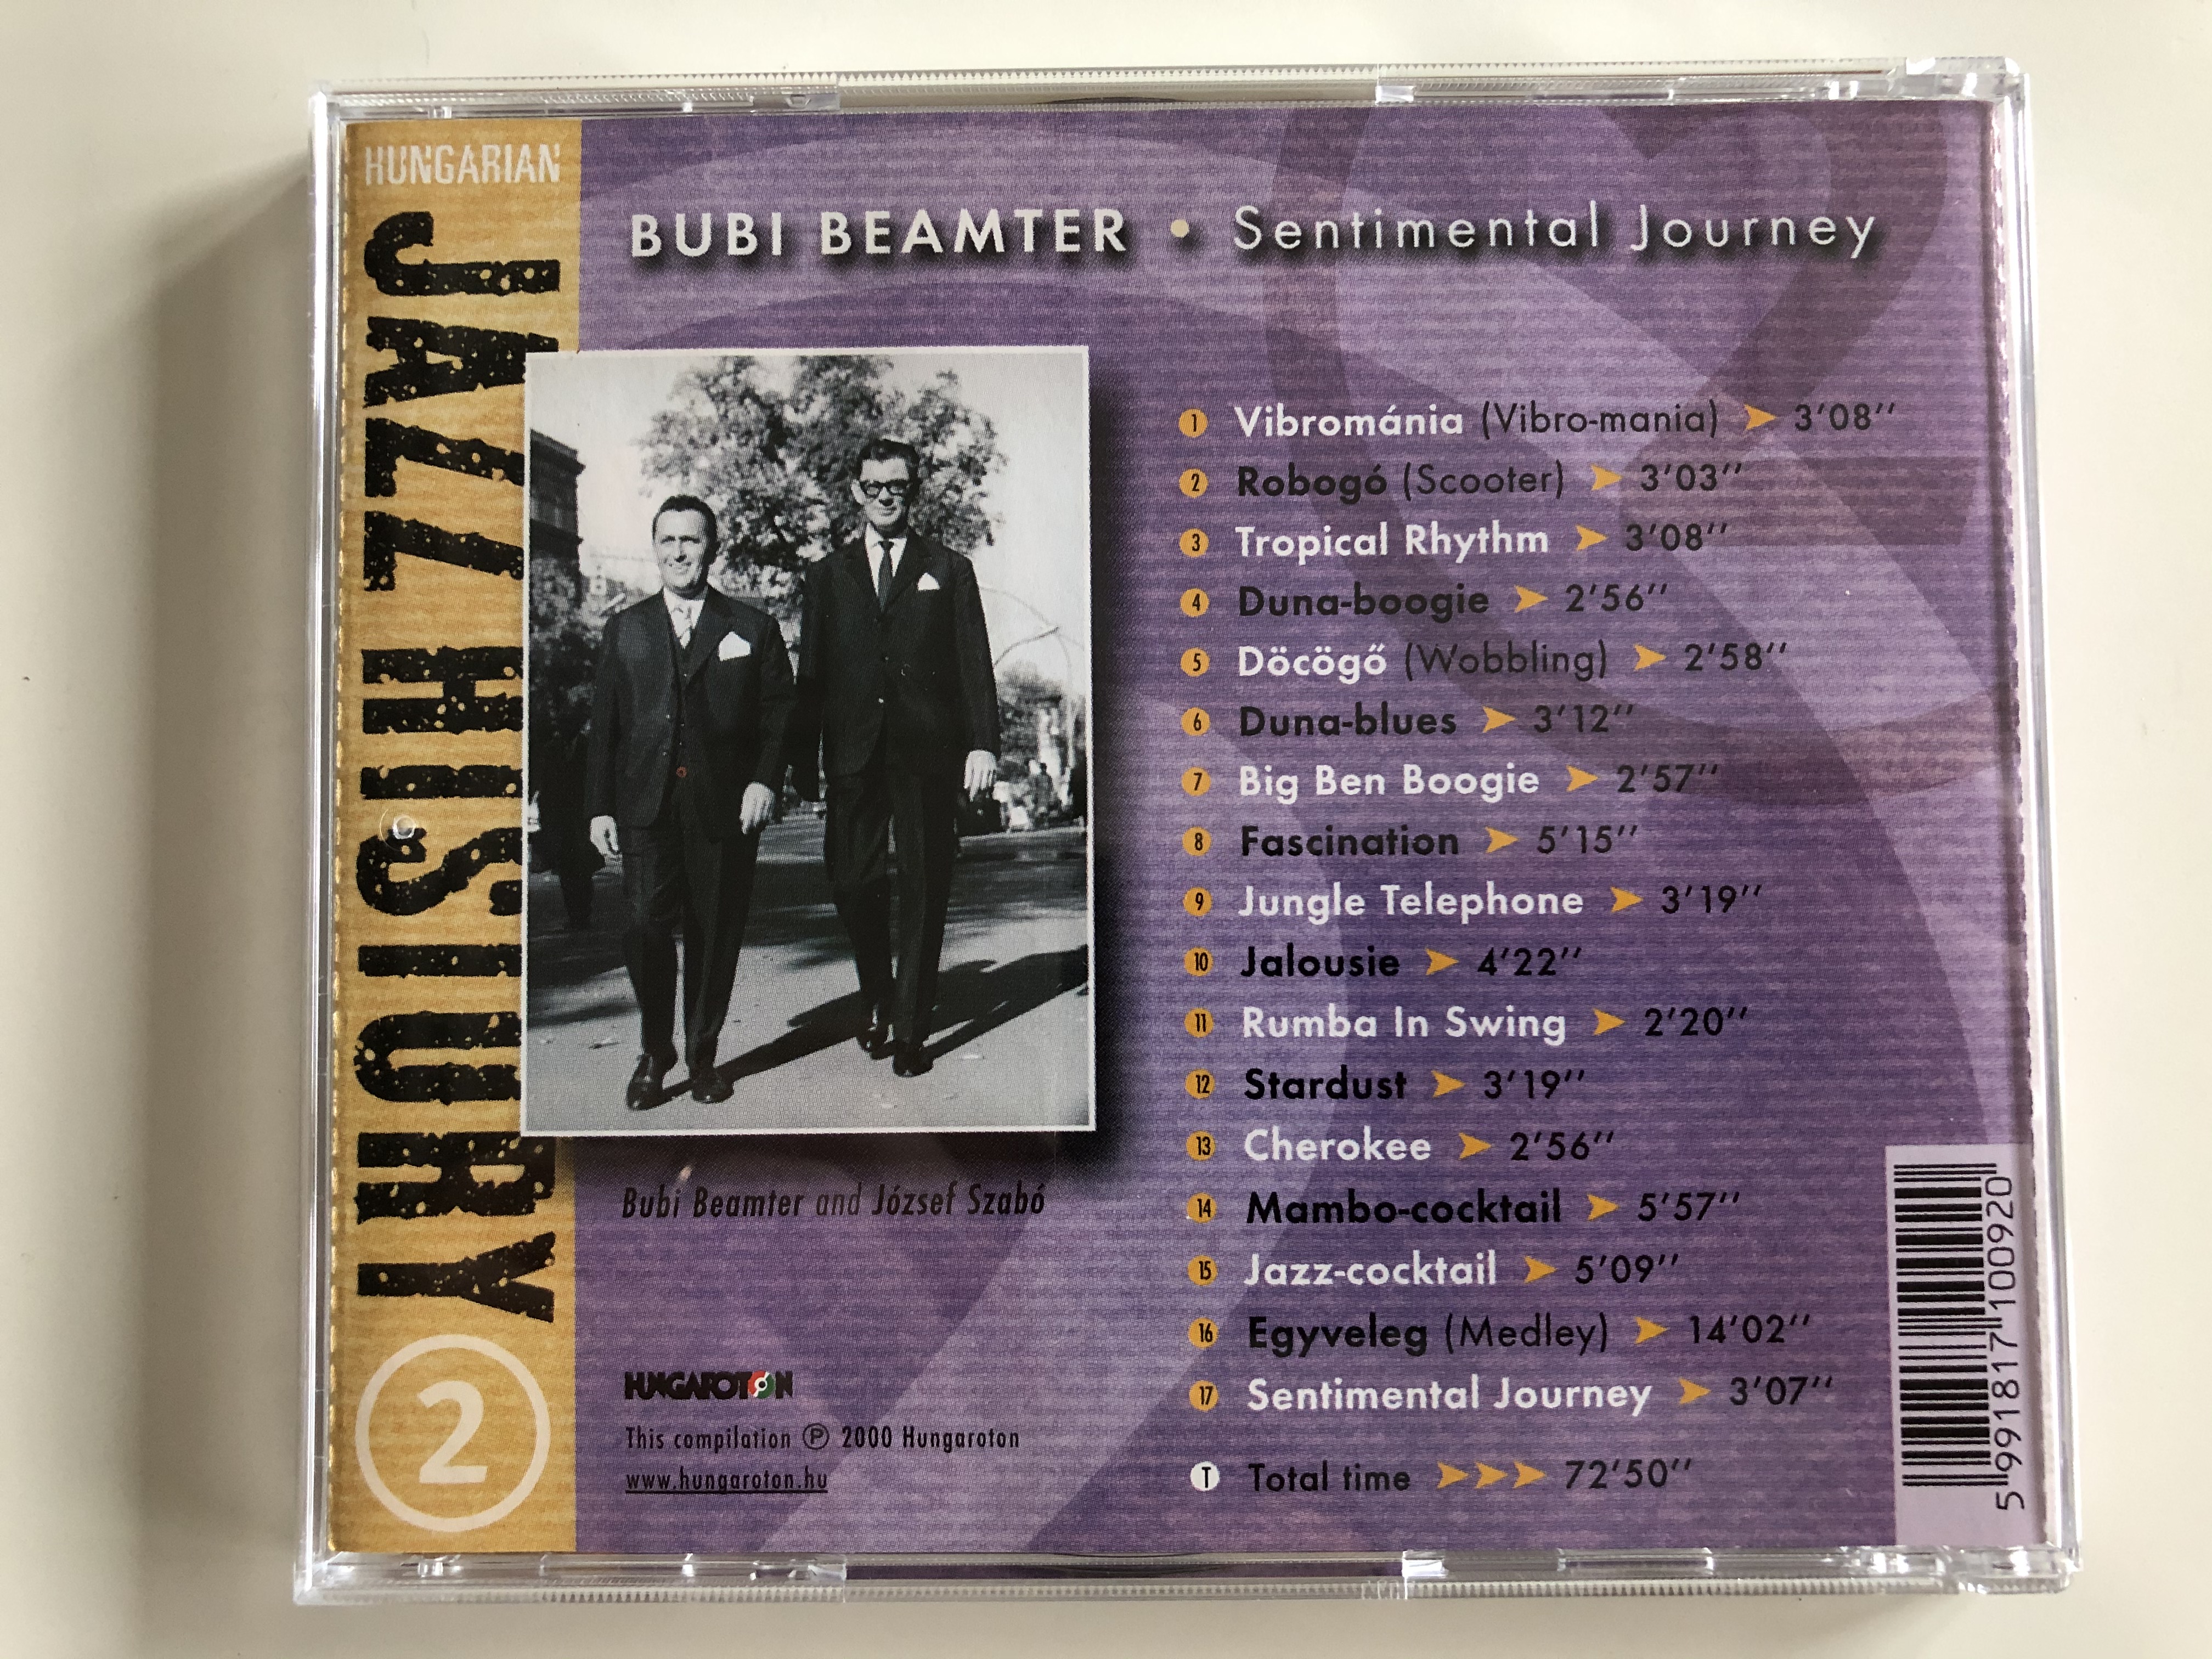 bubi-beamter-sentimental-journey-hungarian-jazz-history-2-hungaroton-audio-cd-2000-hcd-71009-8-.jpg